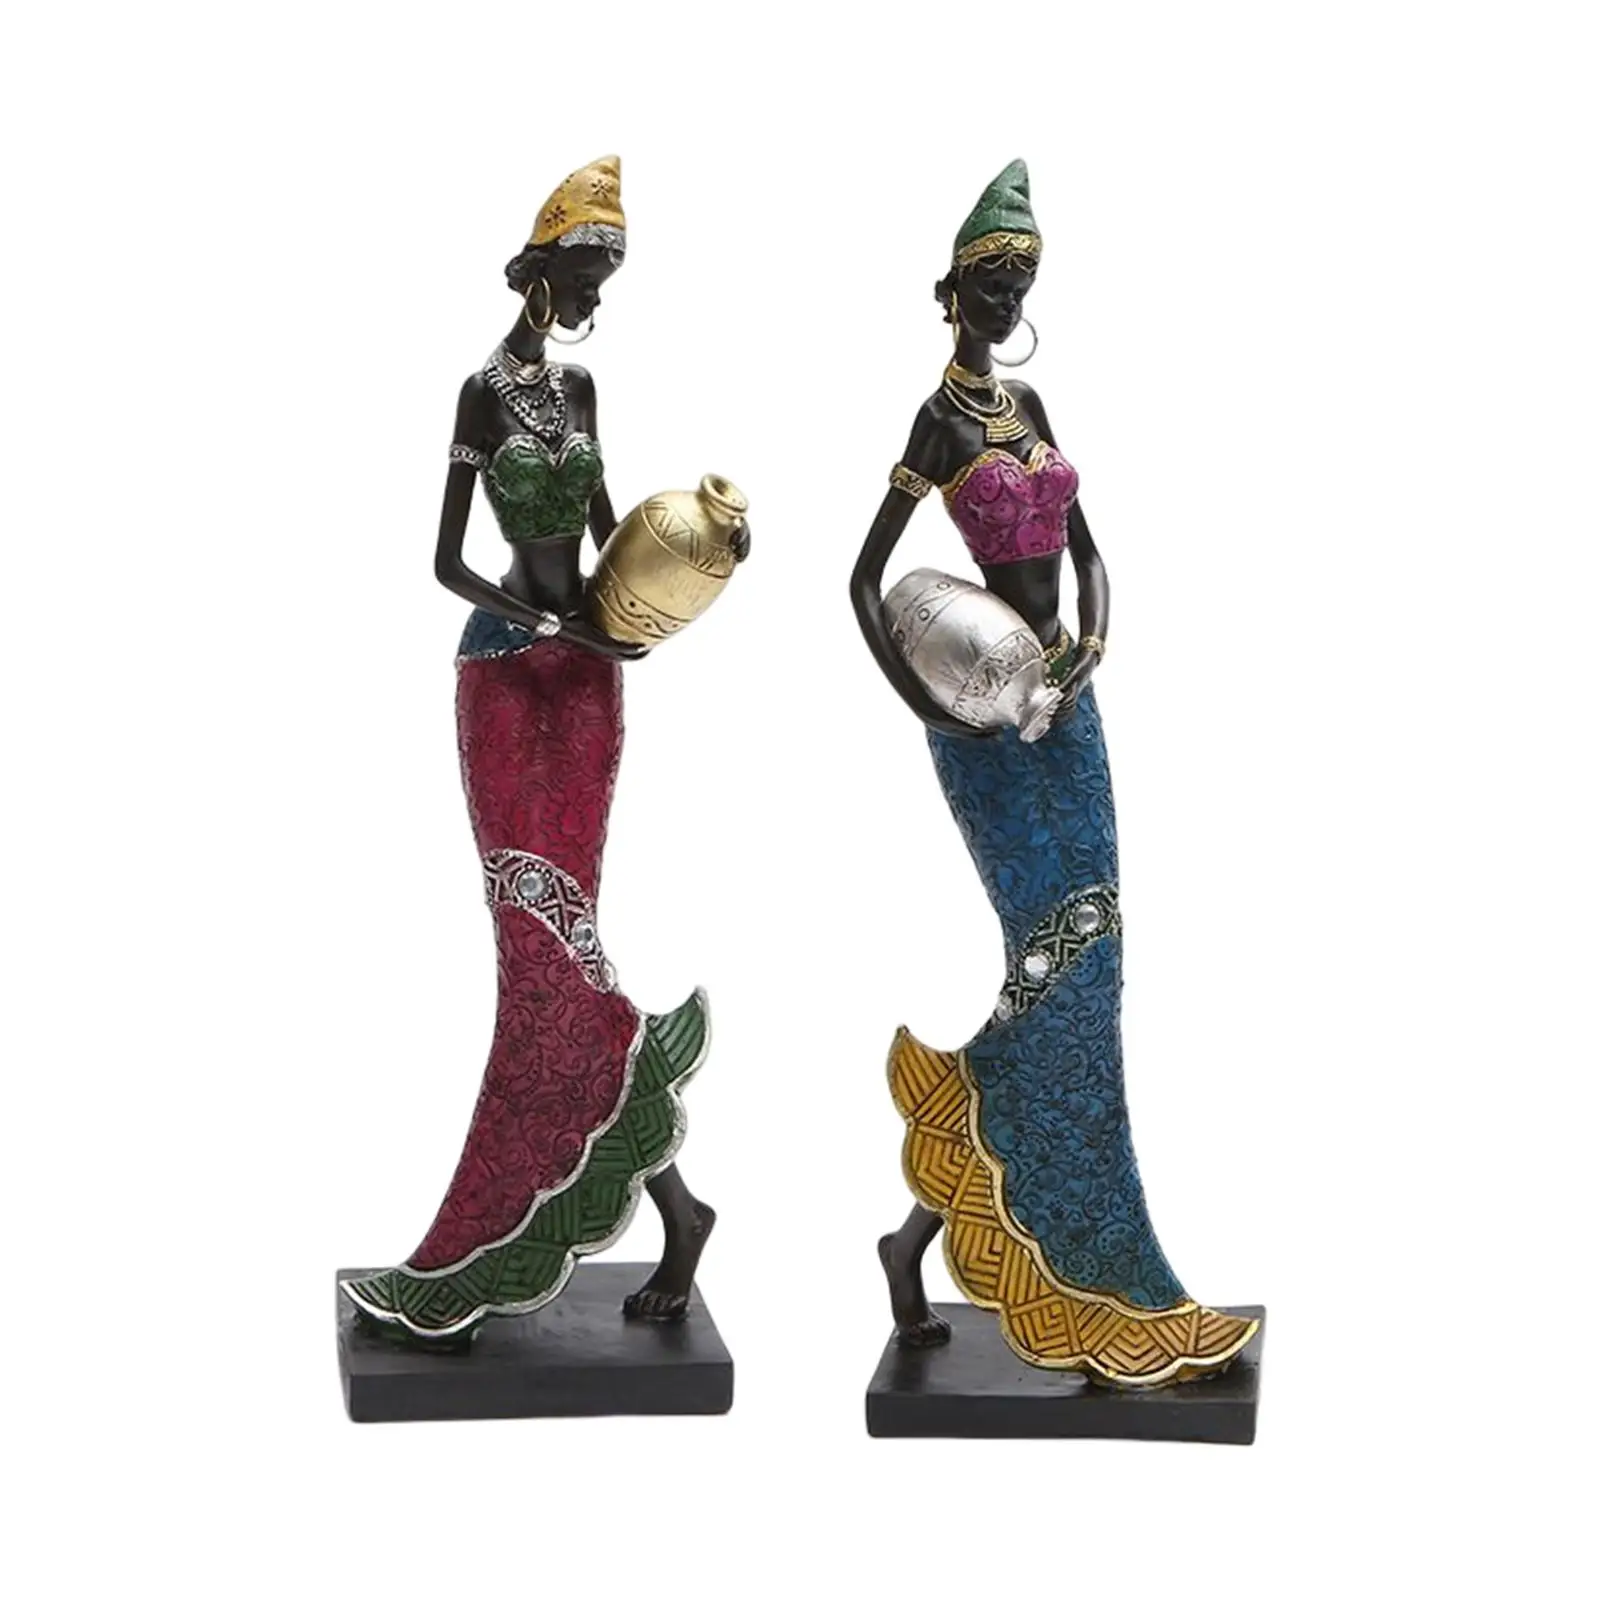 Elegant African Figurine Desktop Decoration Collections Artwork Craft Sculpture Abstract Tribal Women Statue for TV Cabinet Home